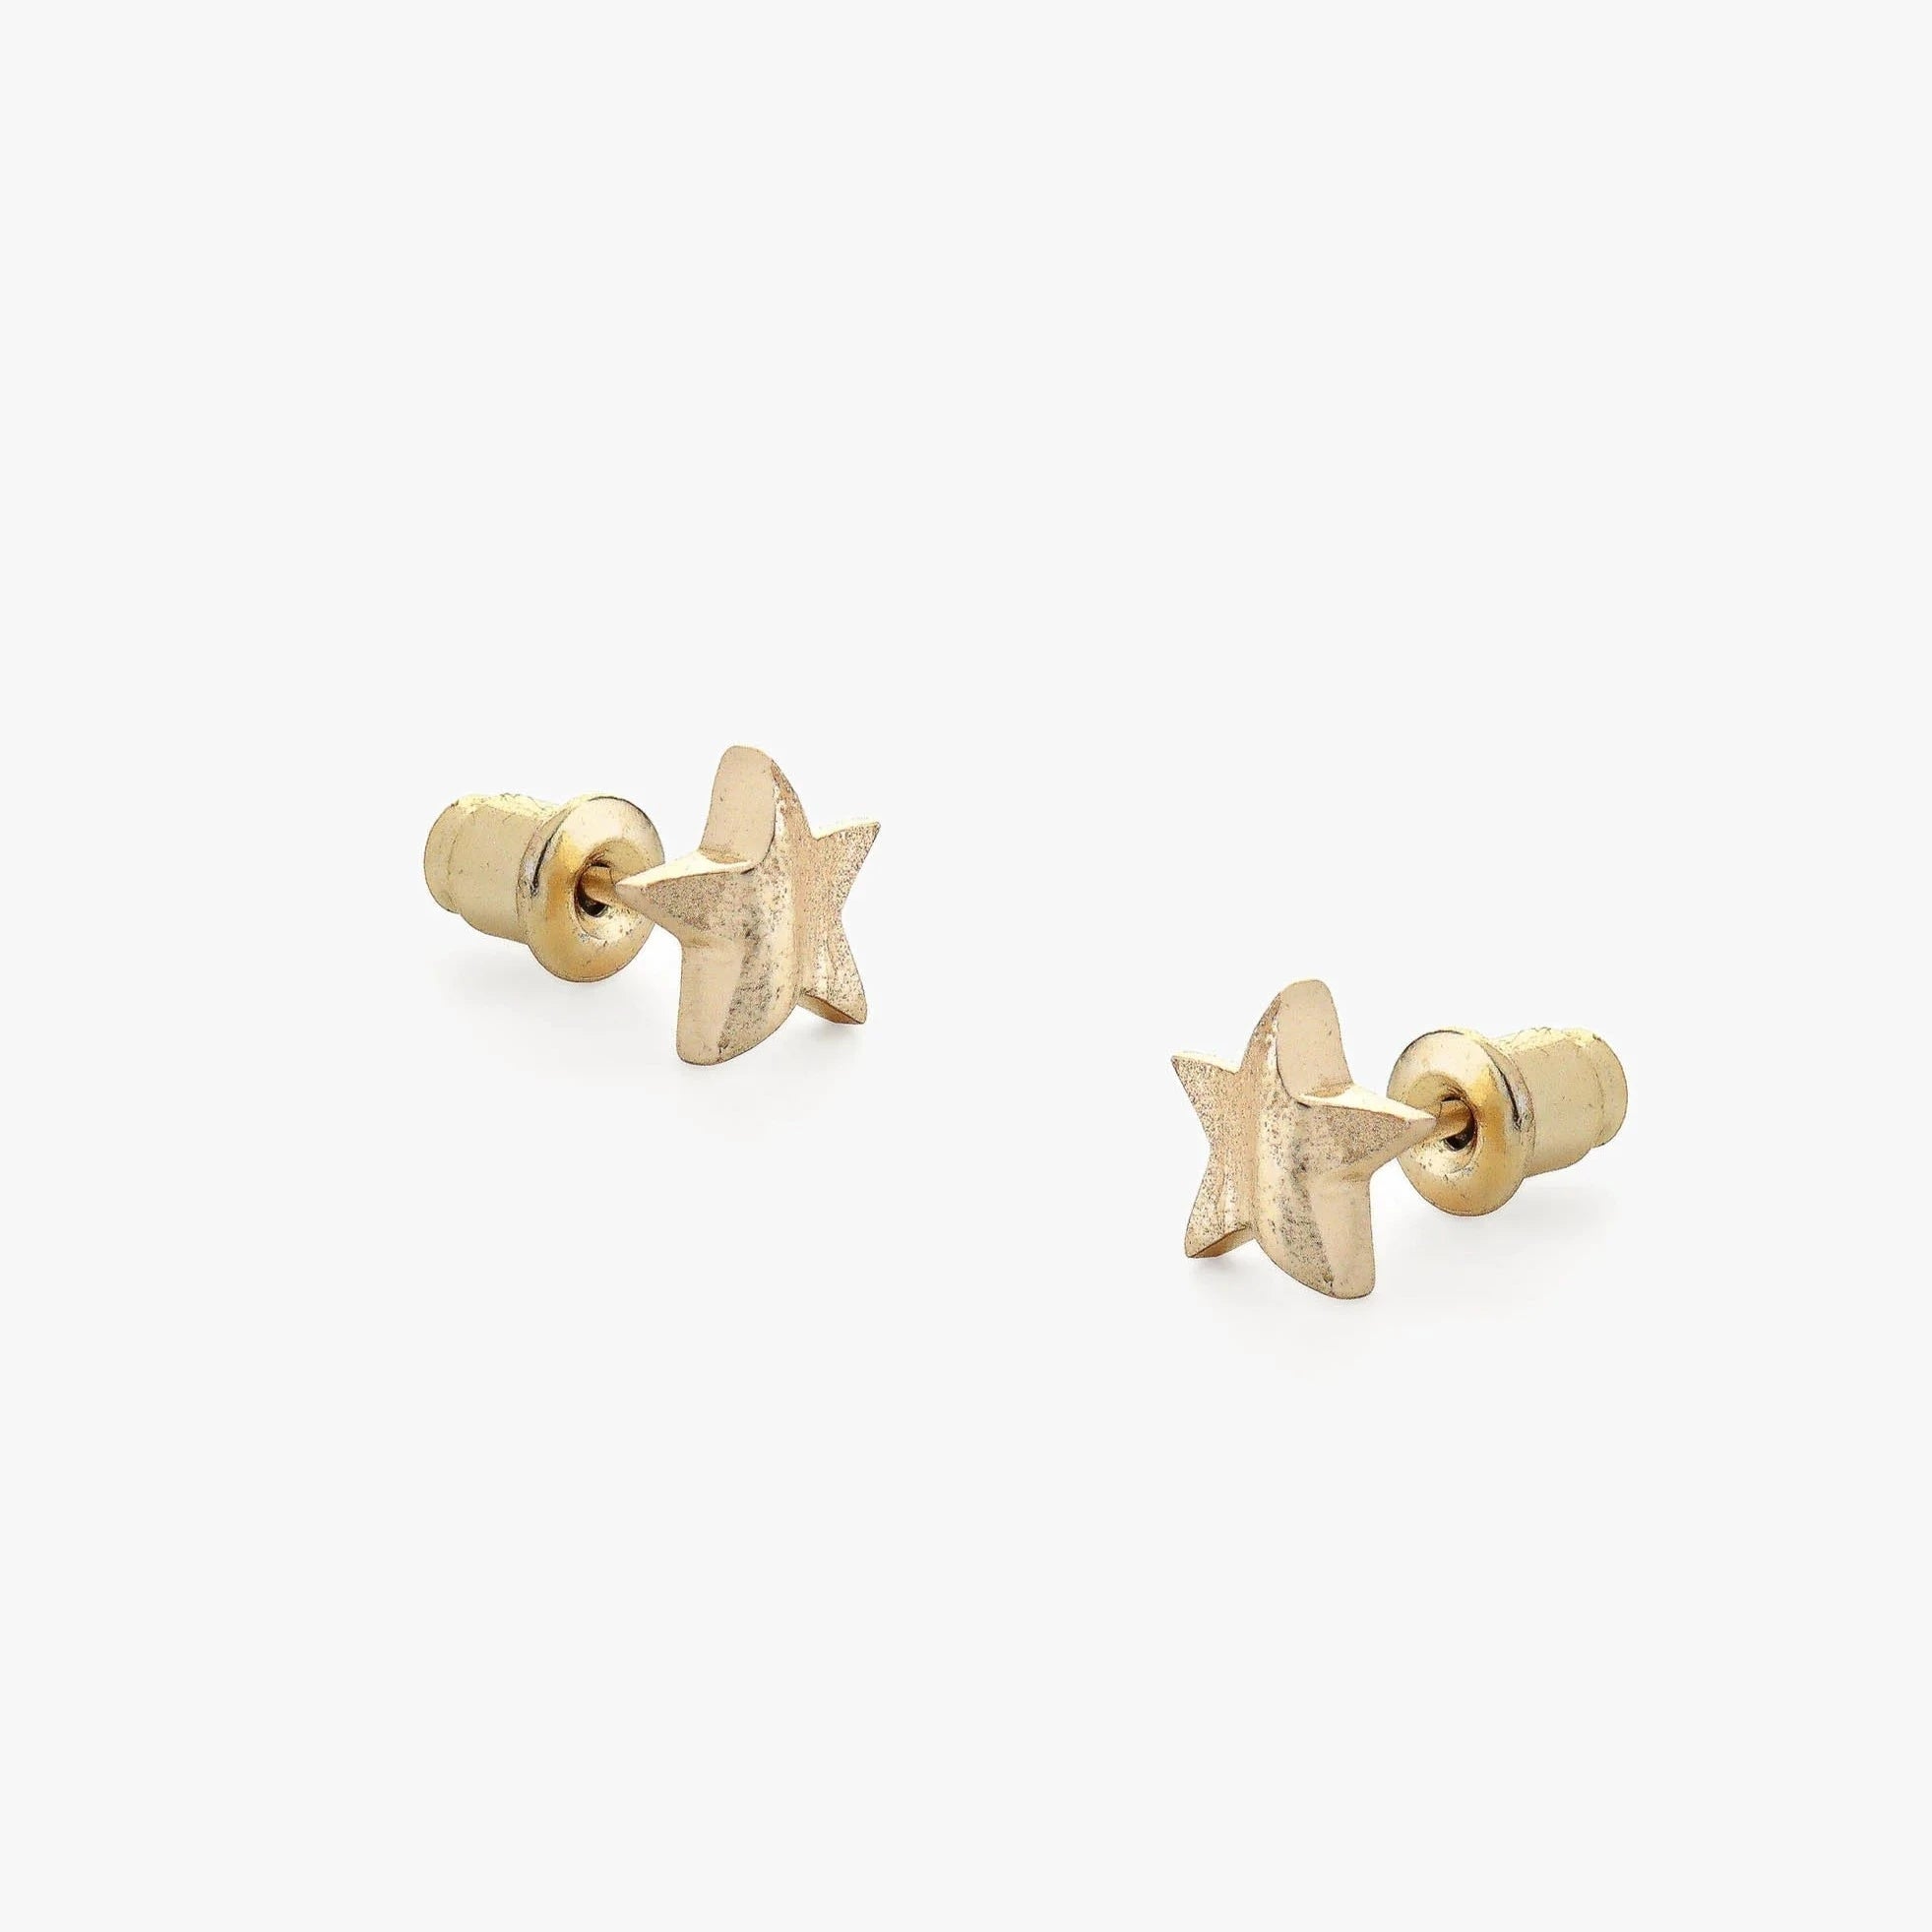 Distance Earrings Gold - The Nancy Smillie Shop - Art, Jewellery & Designer Gifts Glasgow